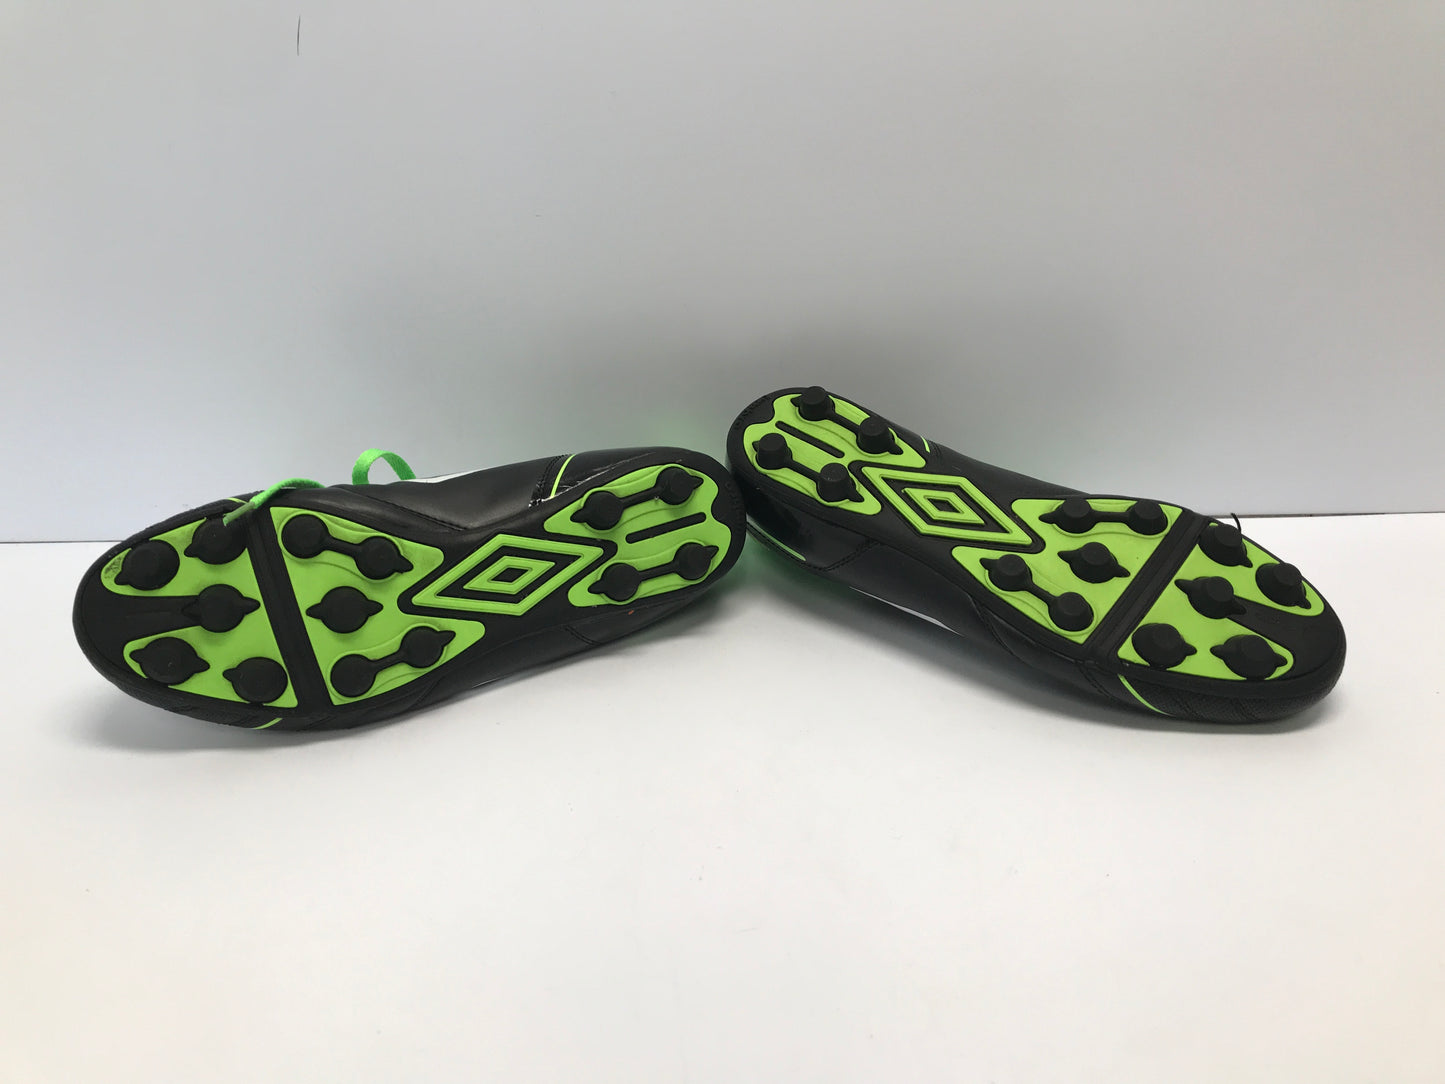 Soccer Shoes Cleats Men's Size 11 Umbro Black Lime Wide Foot Excellent